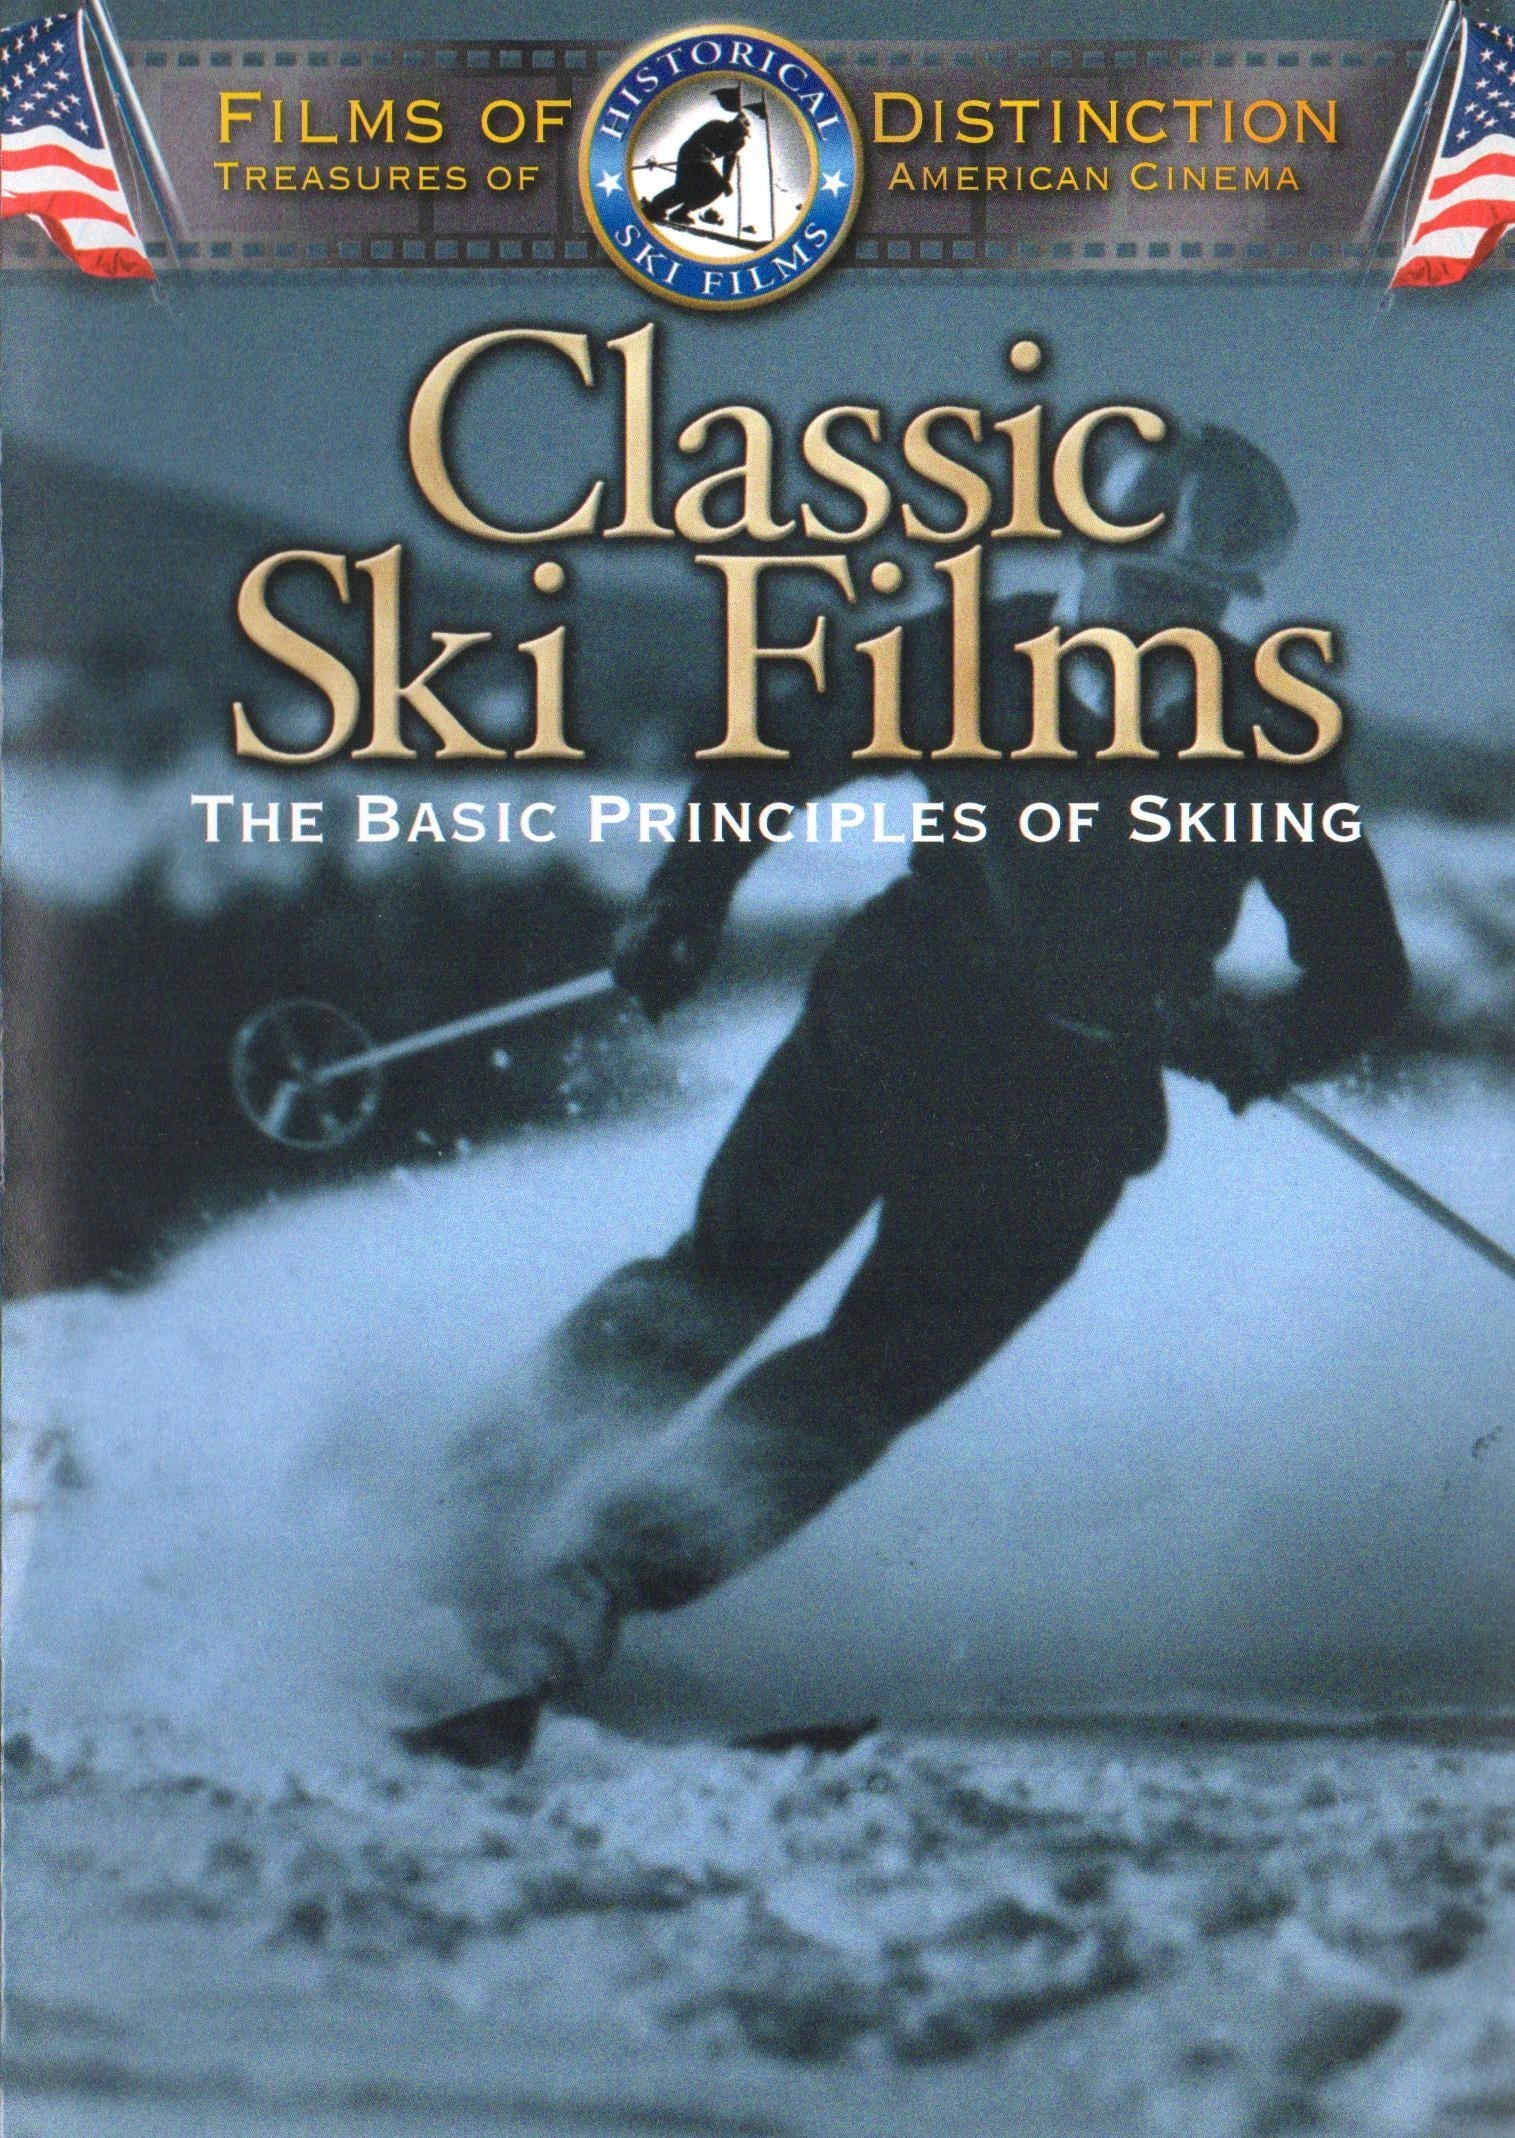 The Basic Principles of Skiing